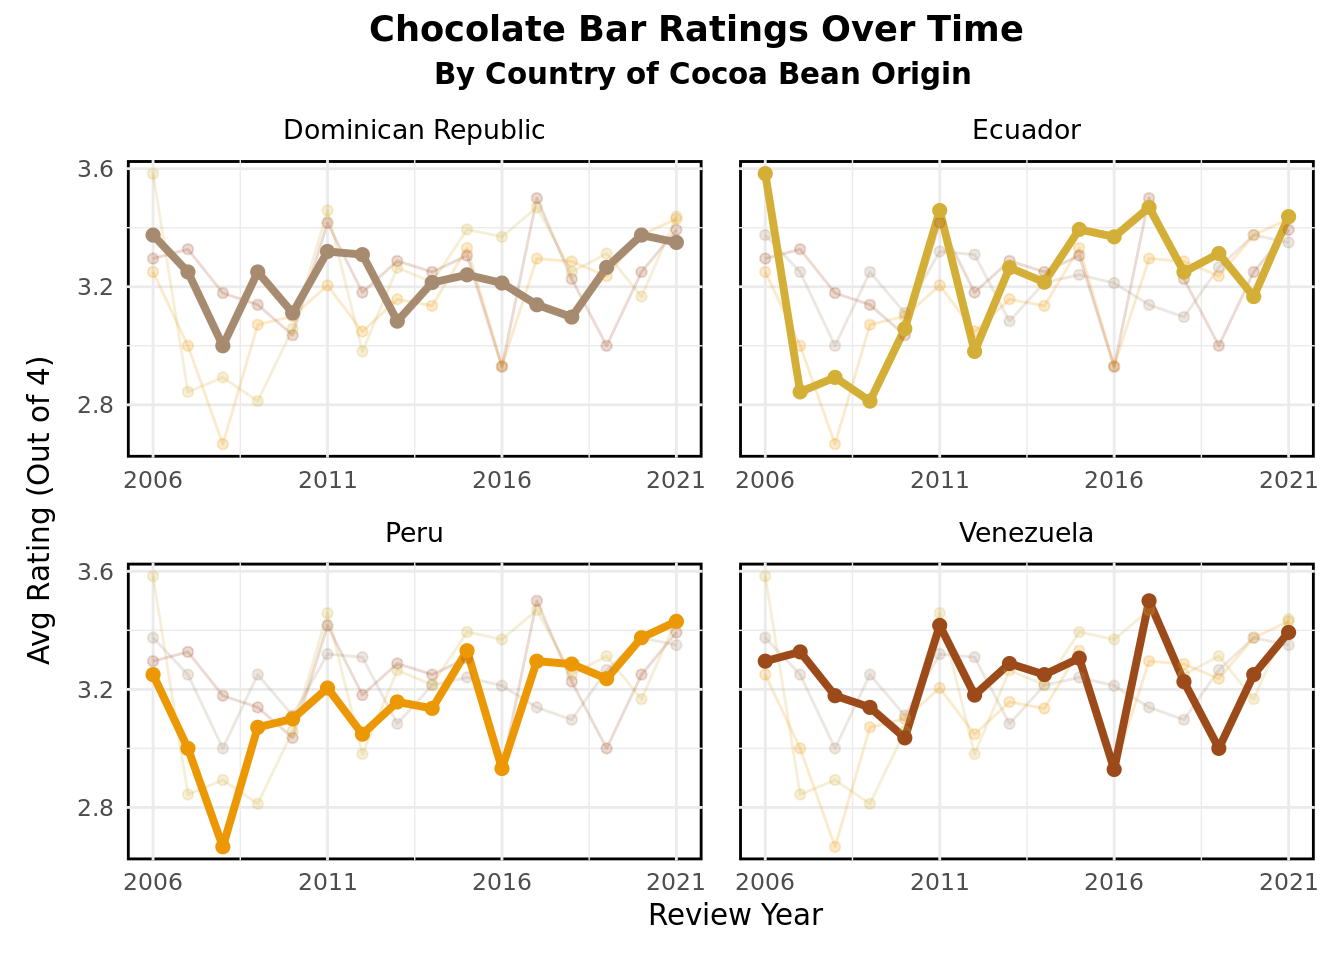 Chocolate bar ratings over time.